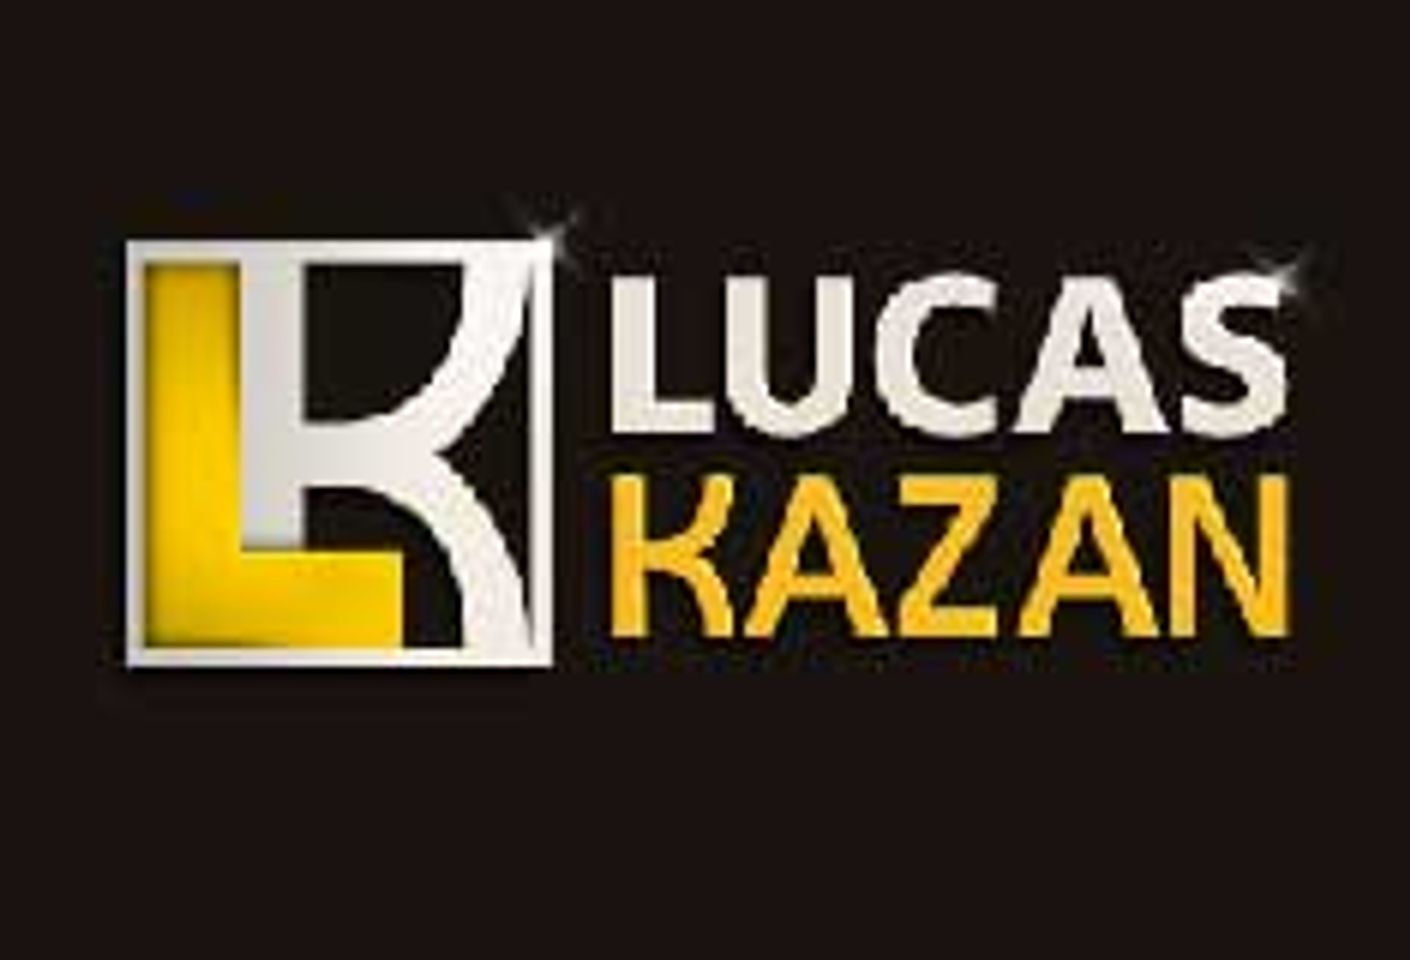 LucasKazan Celebrates 15 Years with 2x1 Special